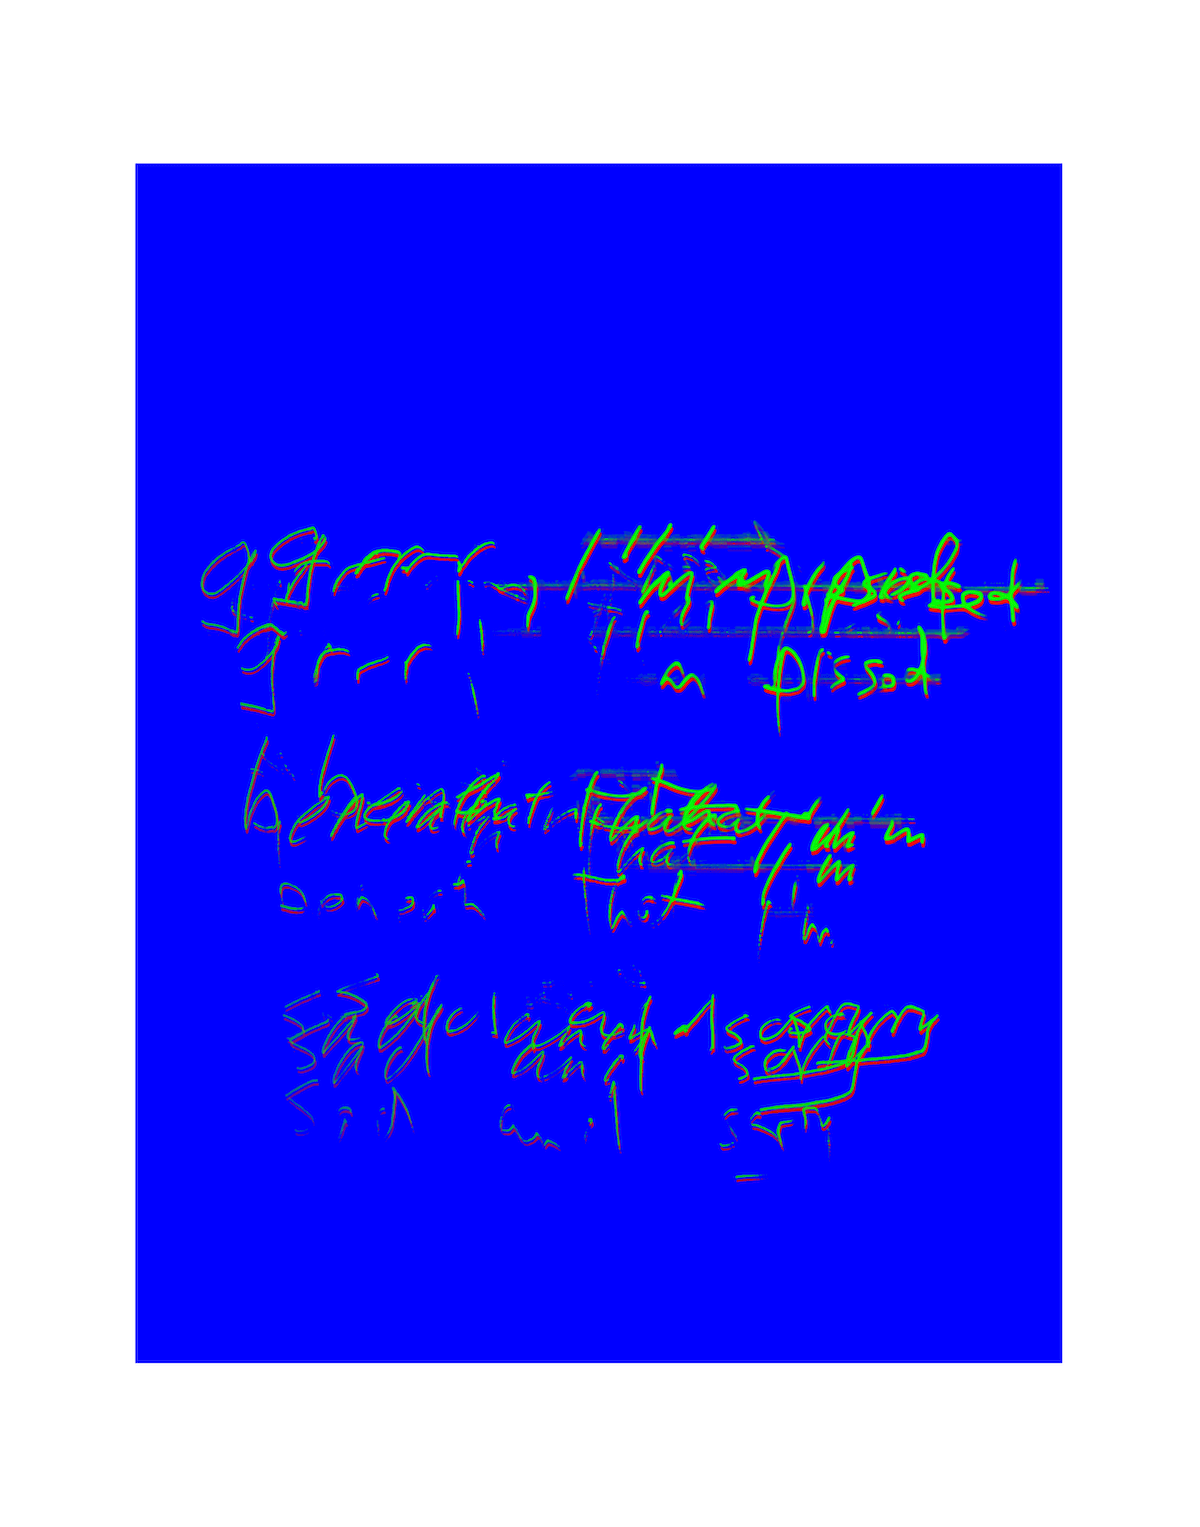 digital artwork of distorted text saying grrrr I'm pissed, over a blue background